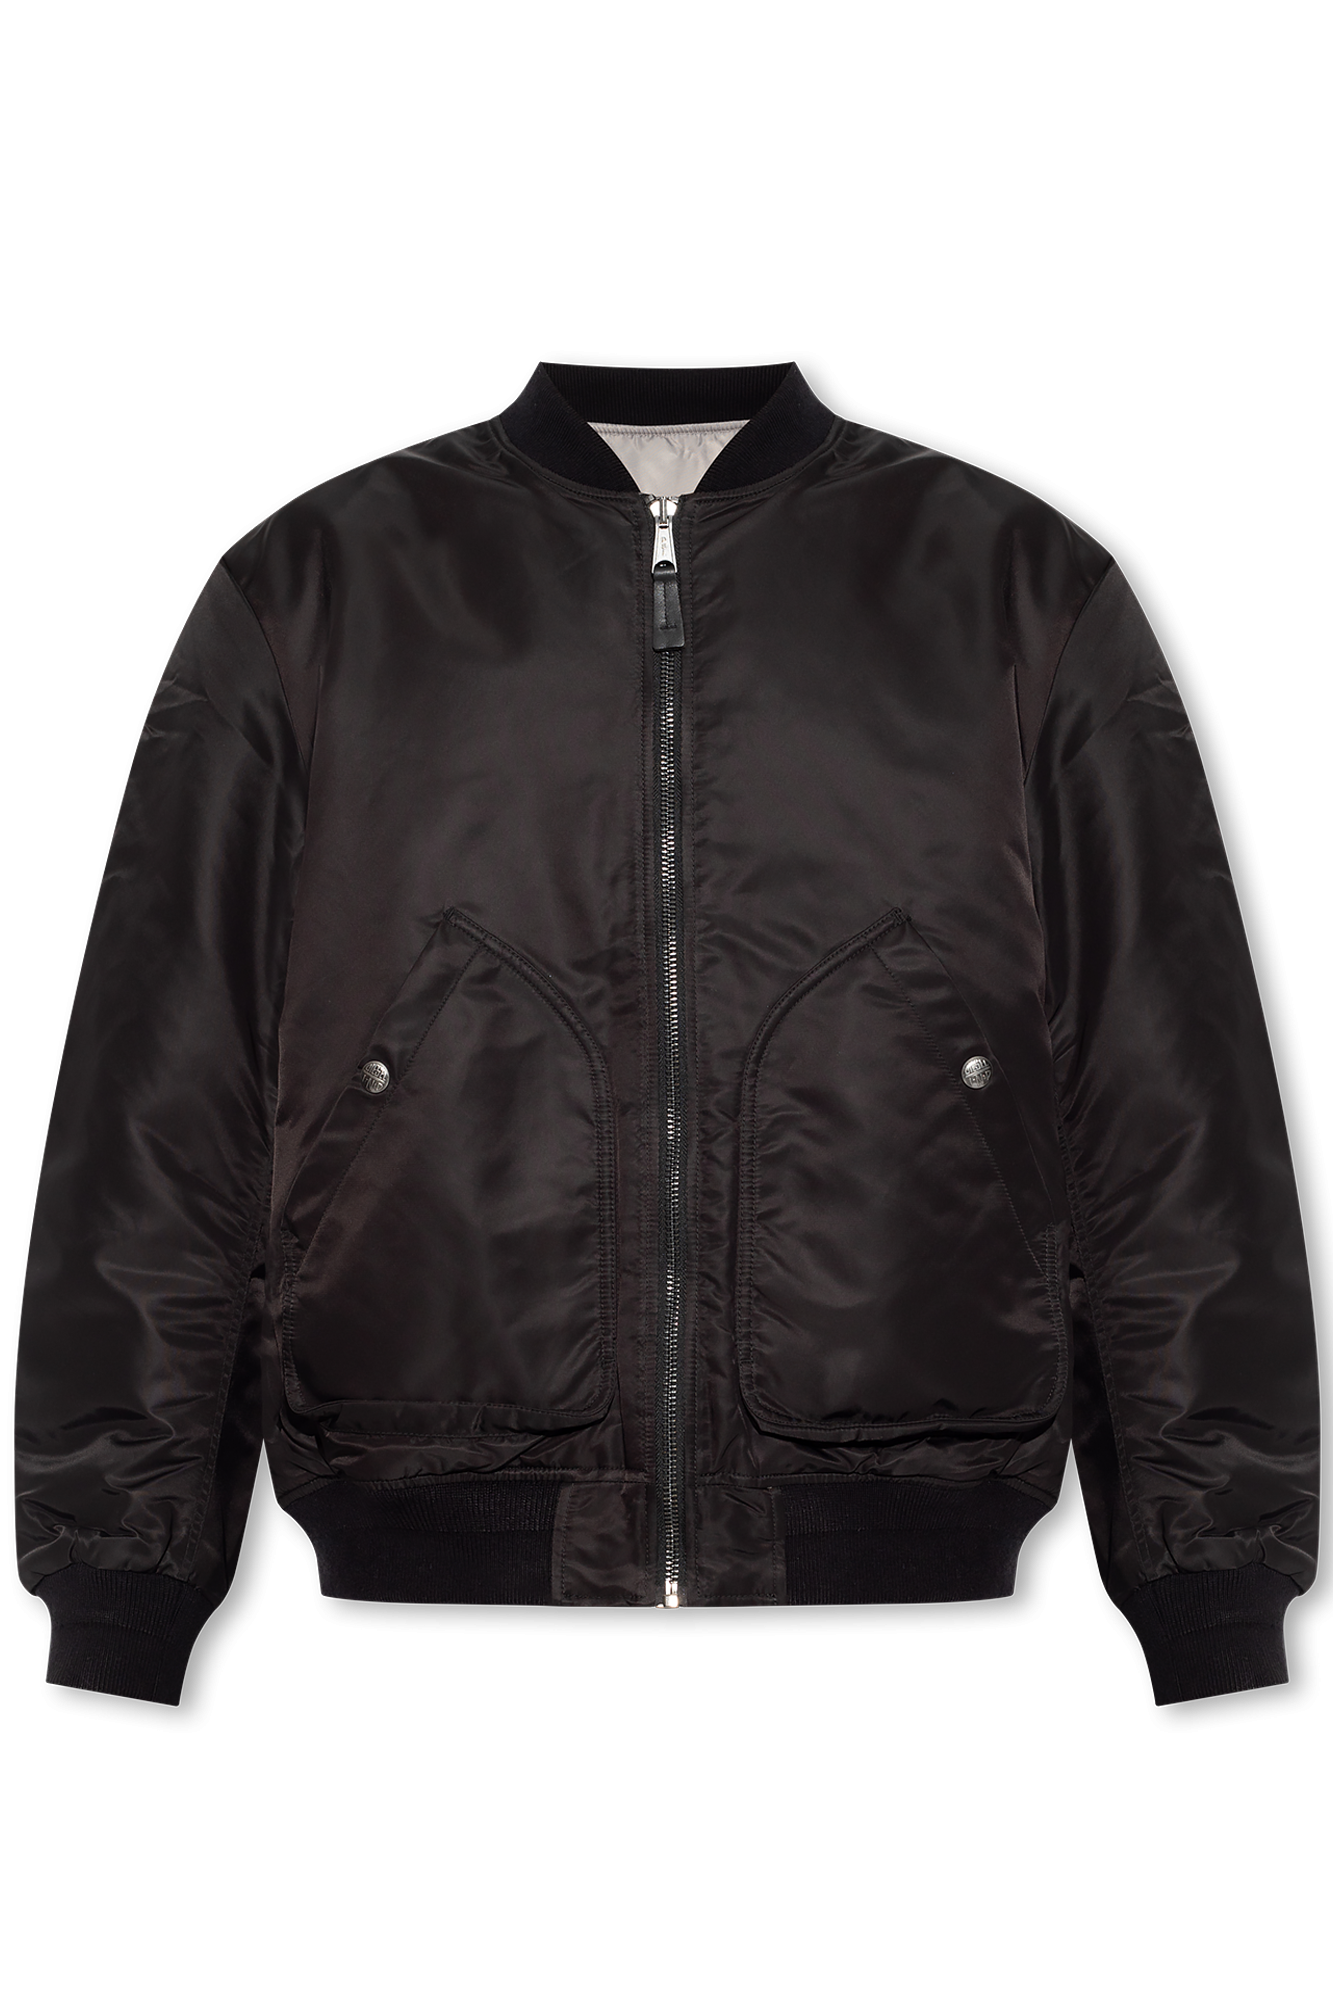 Black ‘J-MATTAN’ reversible bomber jacket Diesel - Vitkac Germany